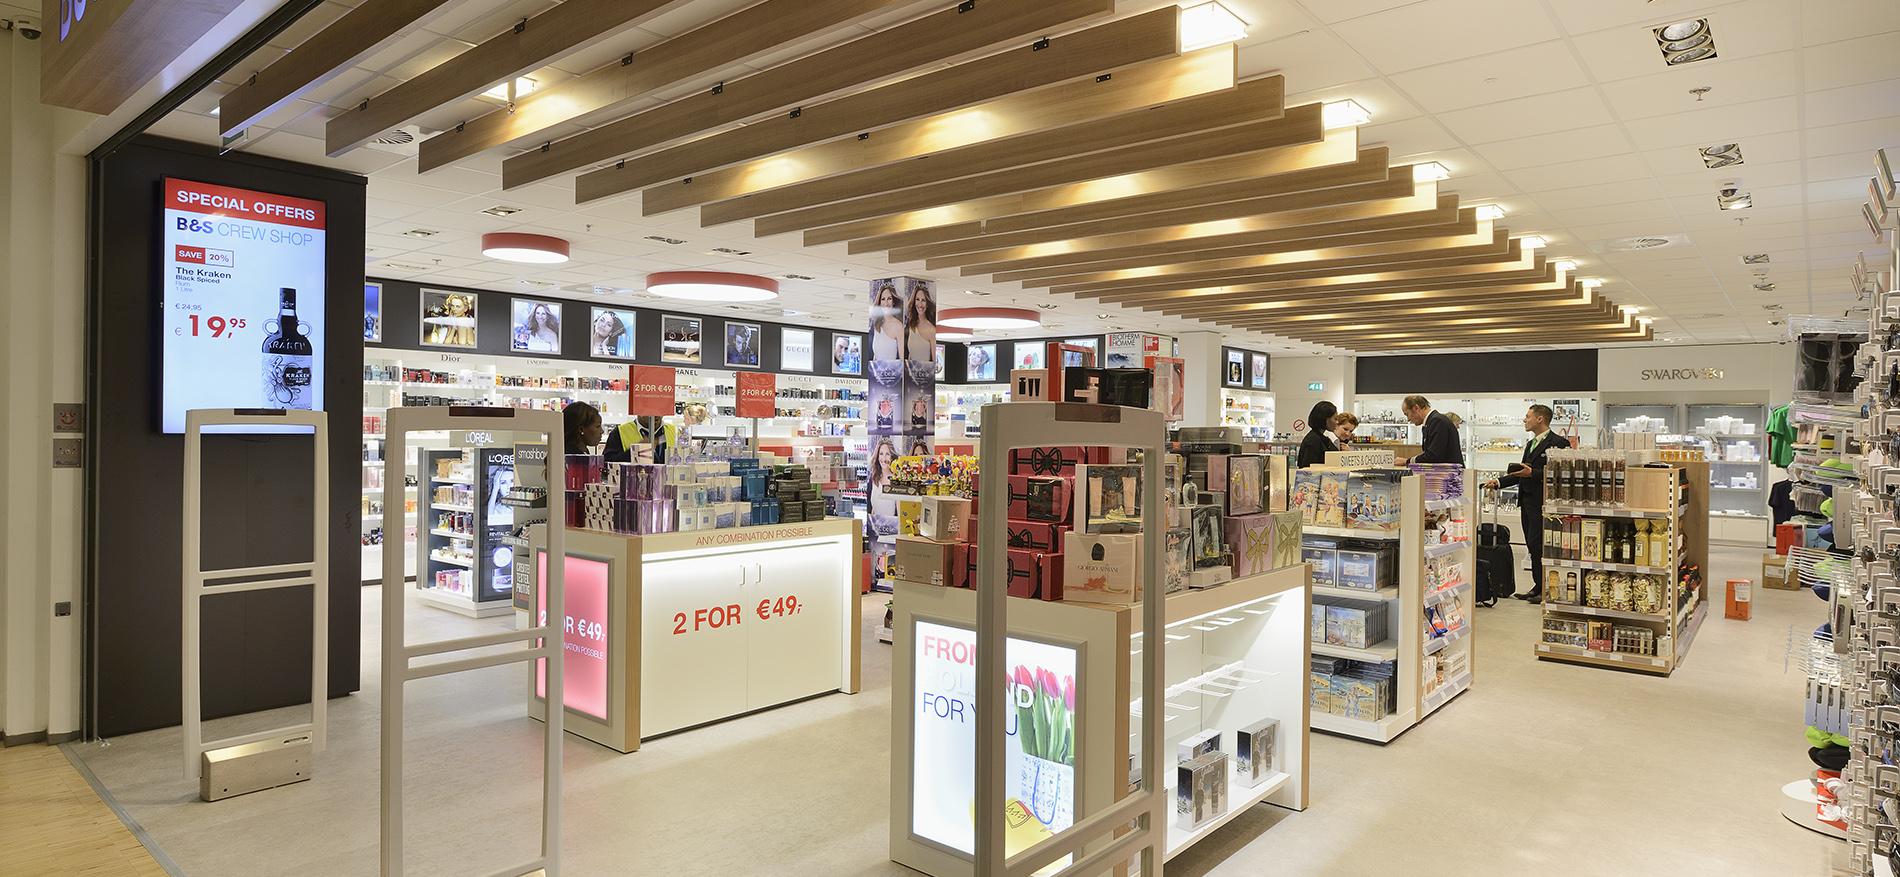 B&S Crew Shop – Winkelinrichting Luchthaven Schiphol - Retailketens